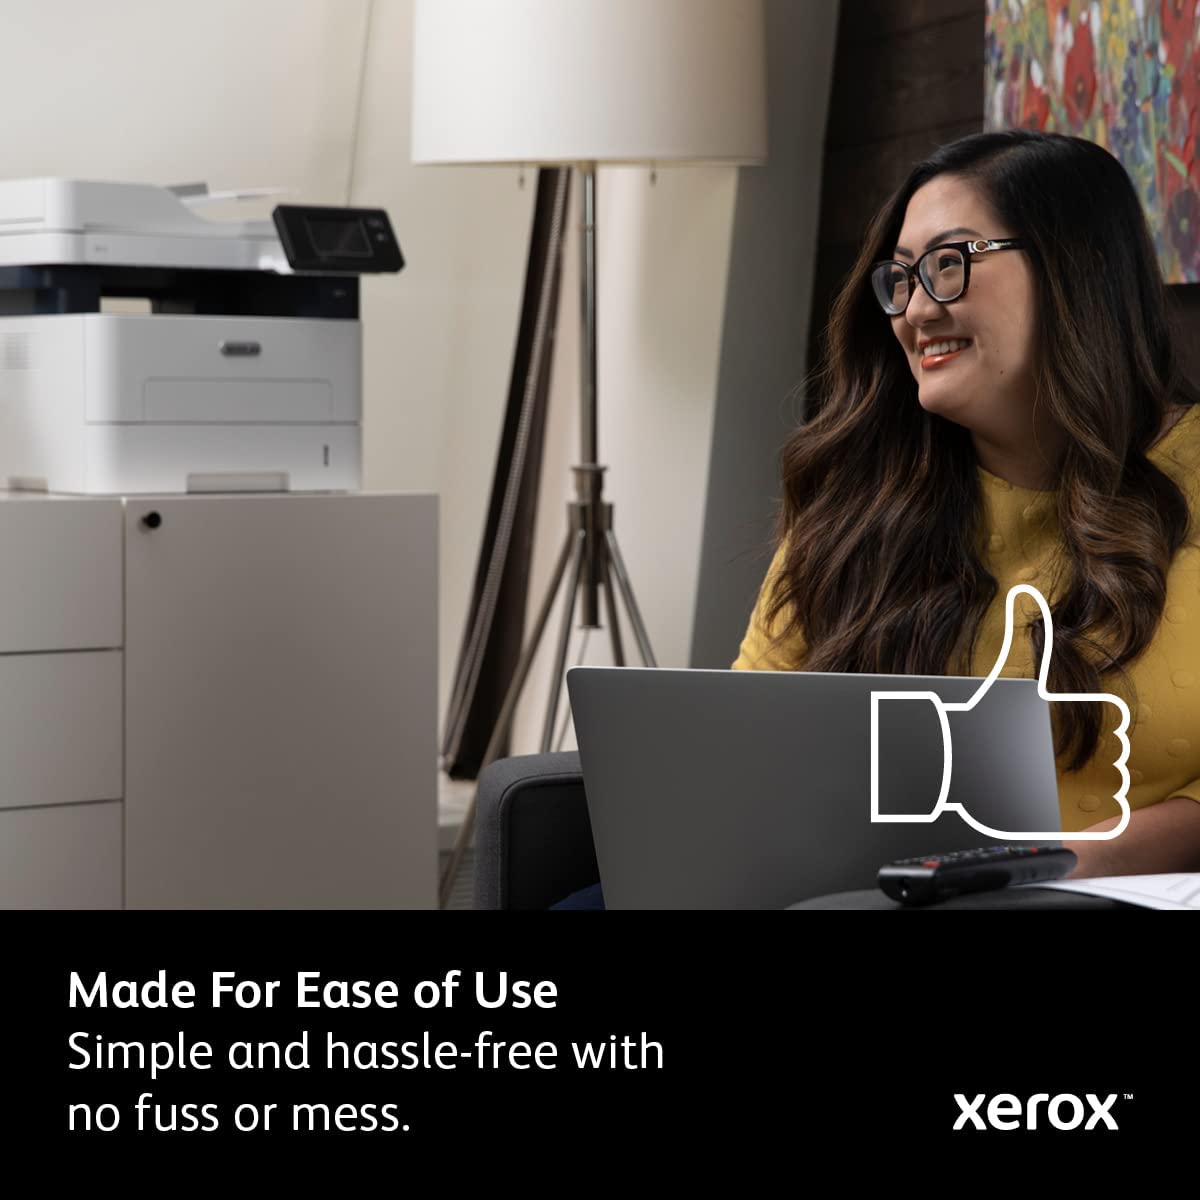 Xerox Phaser 6280 Black Standard Capacity Toner Cartridge (3,000 Pages) - 106R01391 Standard Capacity Black